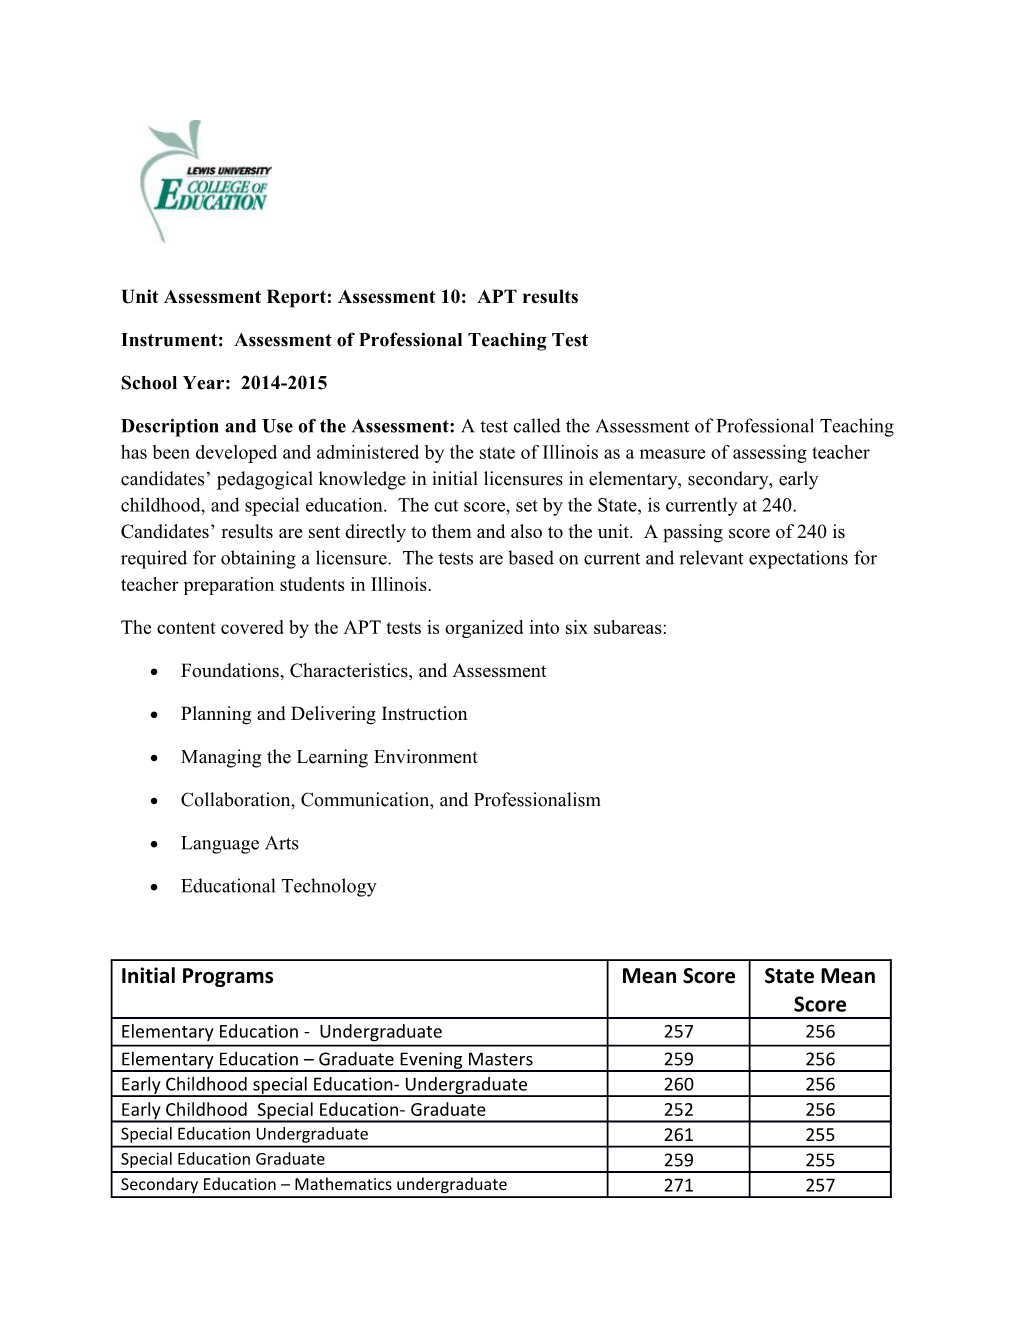 Unit Assessment Report: Assessment 10: APT Results